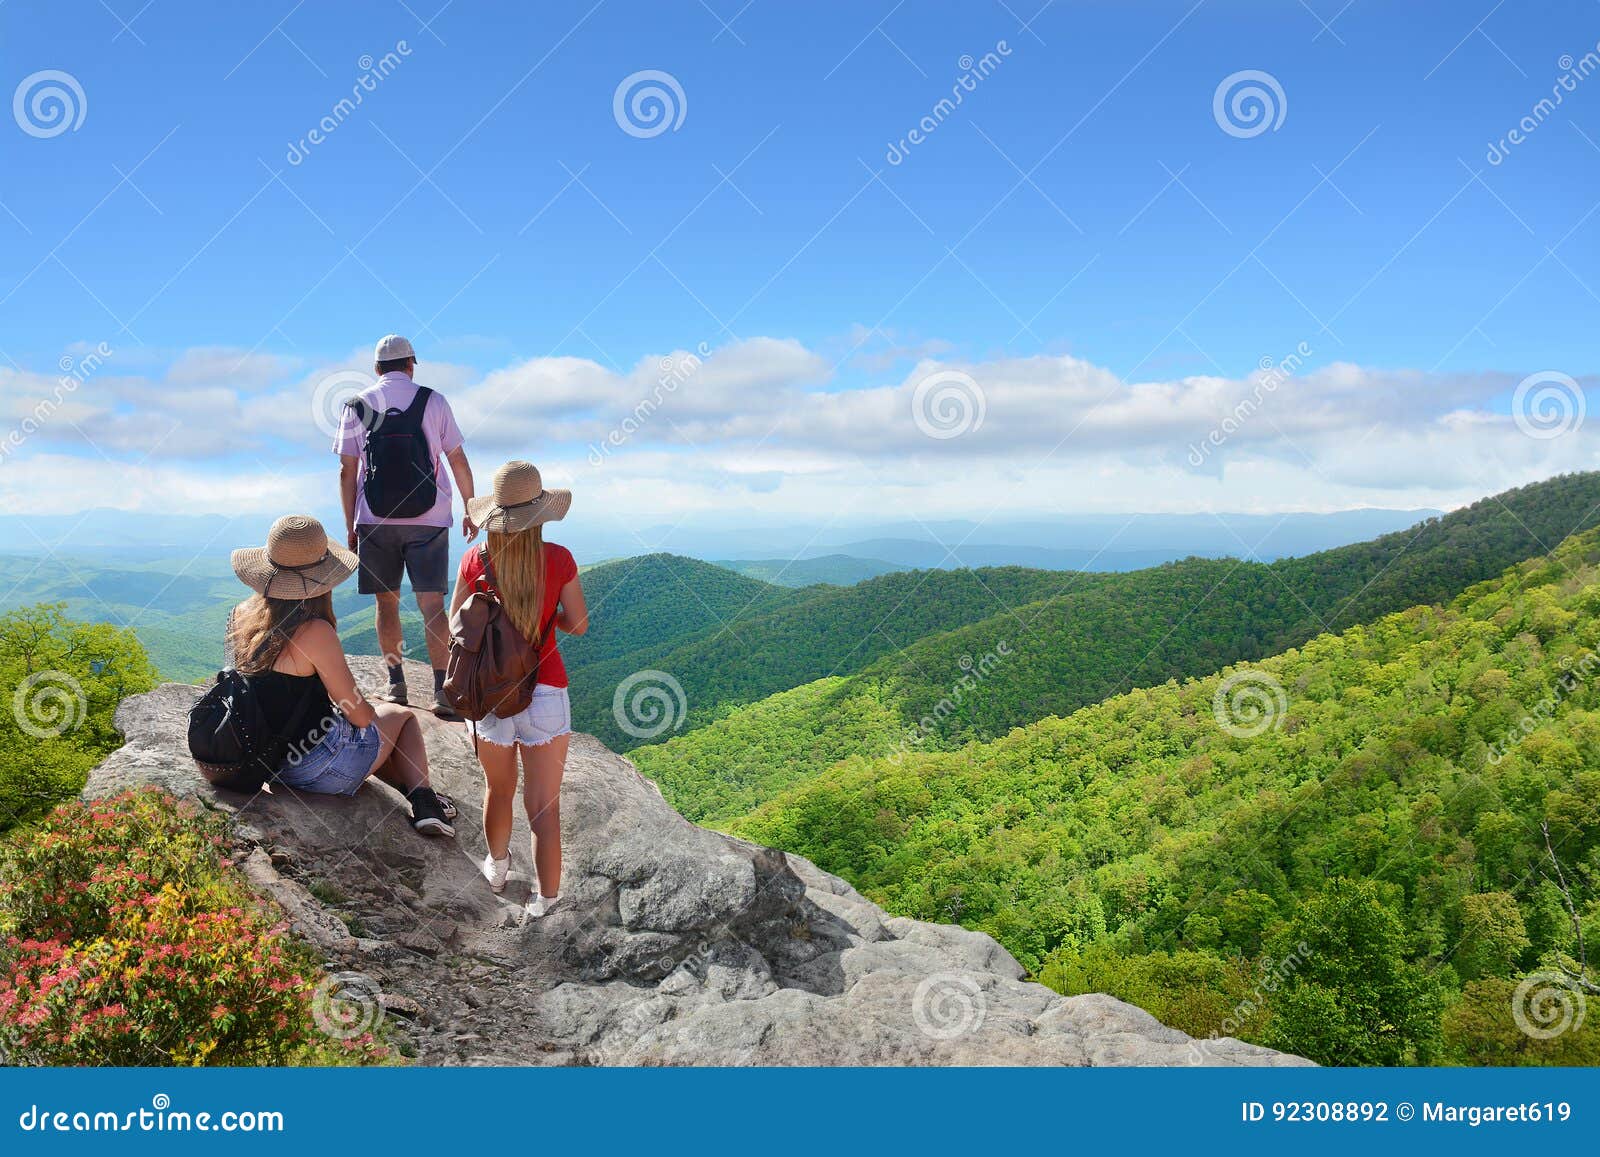 489,855 Hiking Summer Mountains Stock Photos - Free & Royalty-Free